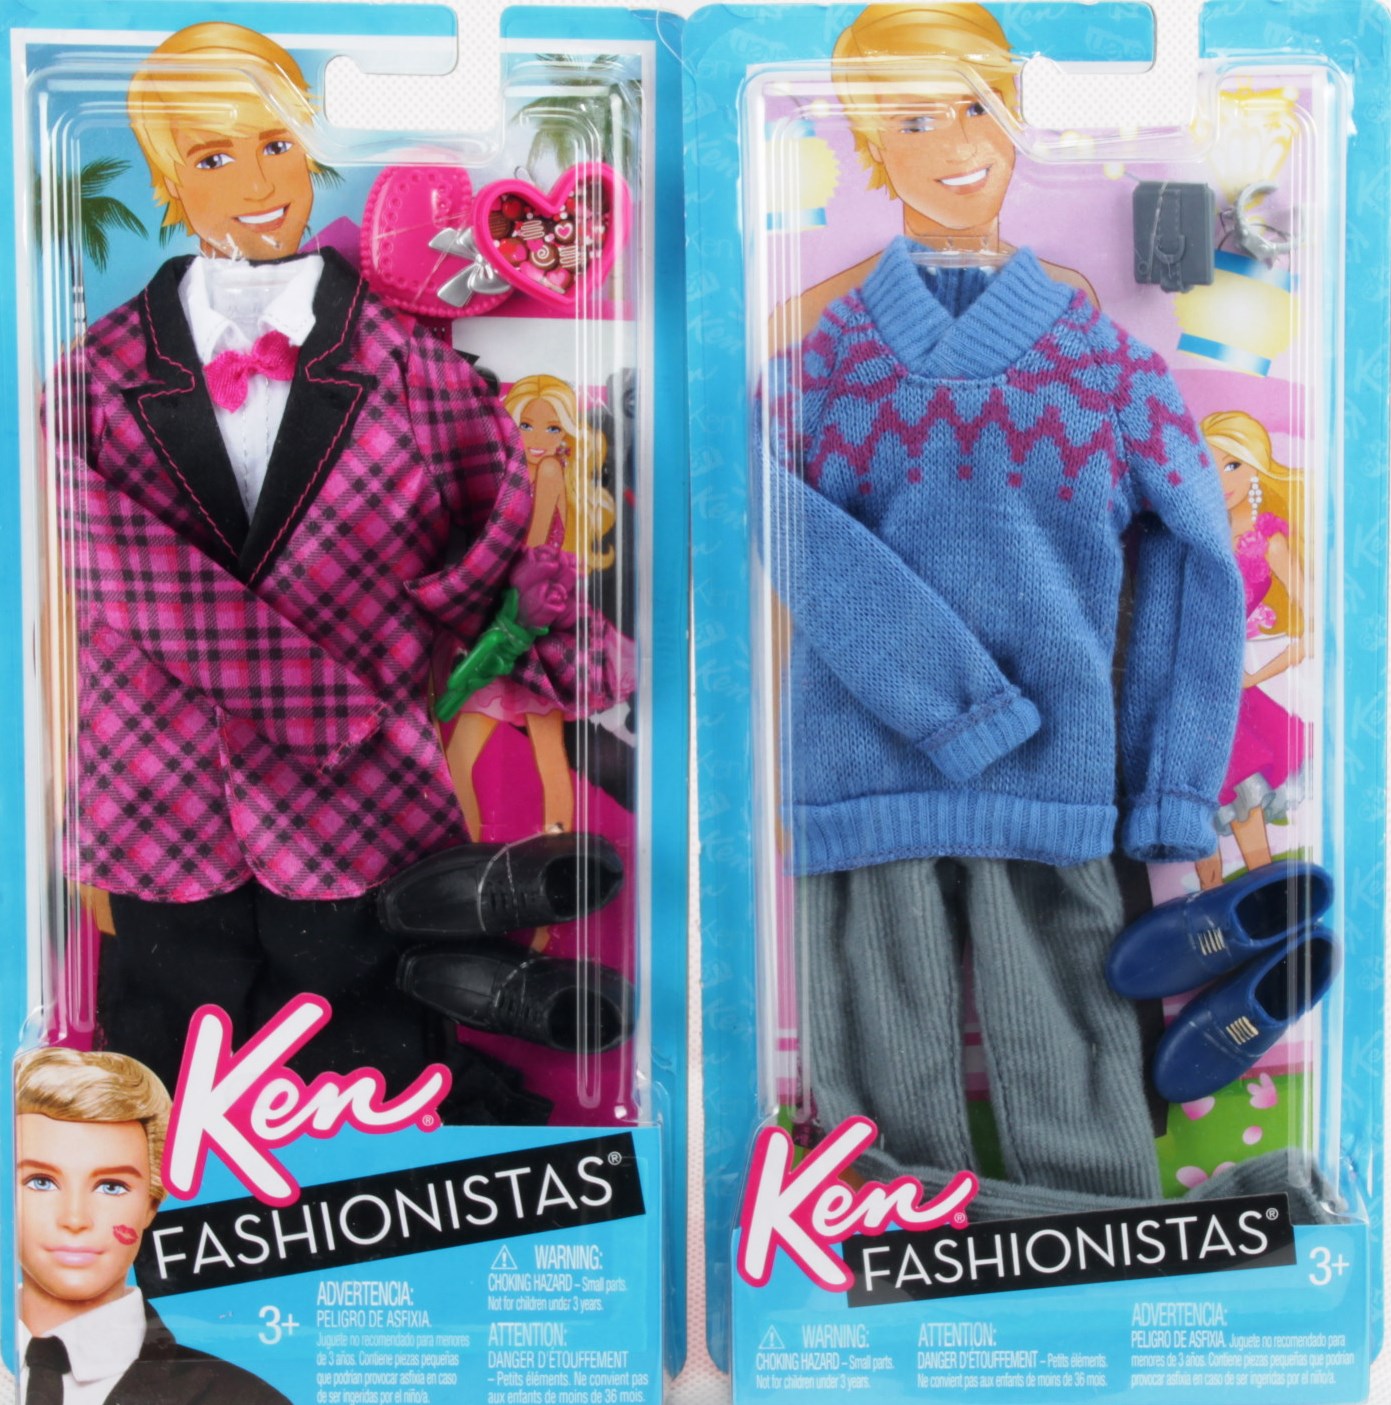 ken fashionista clothes